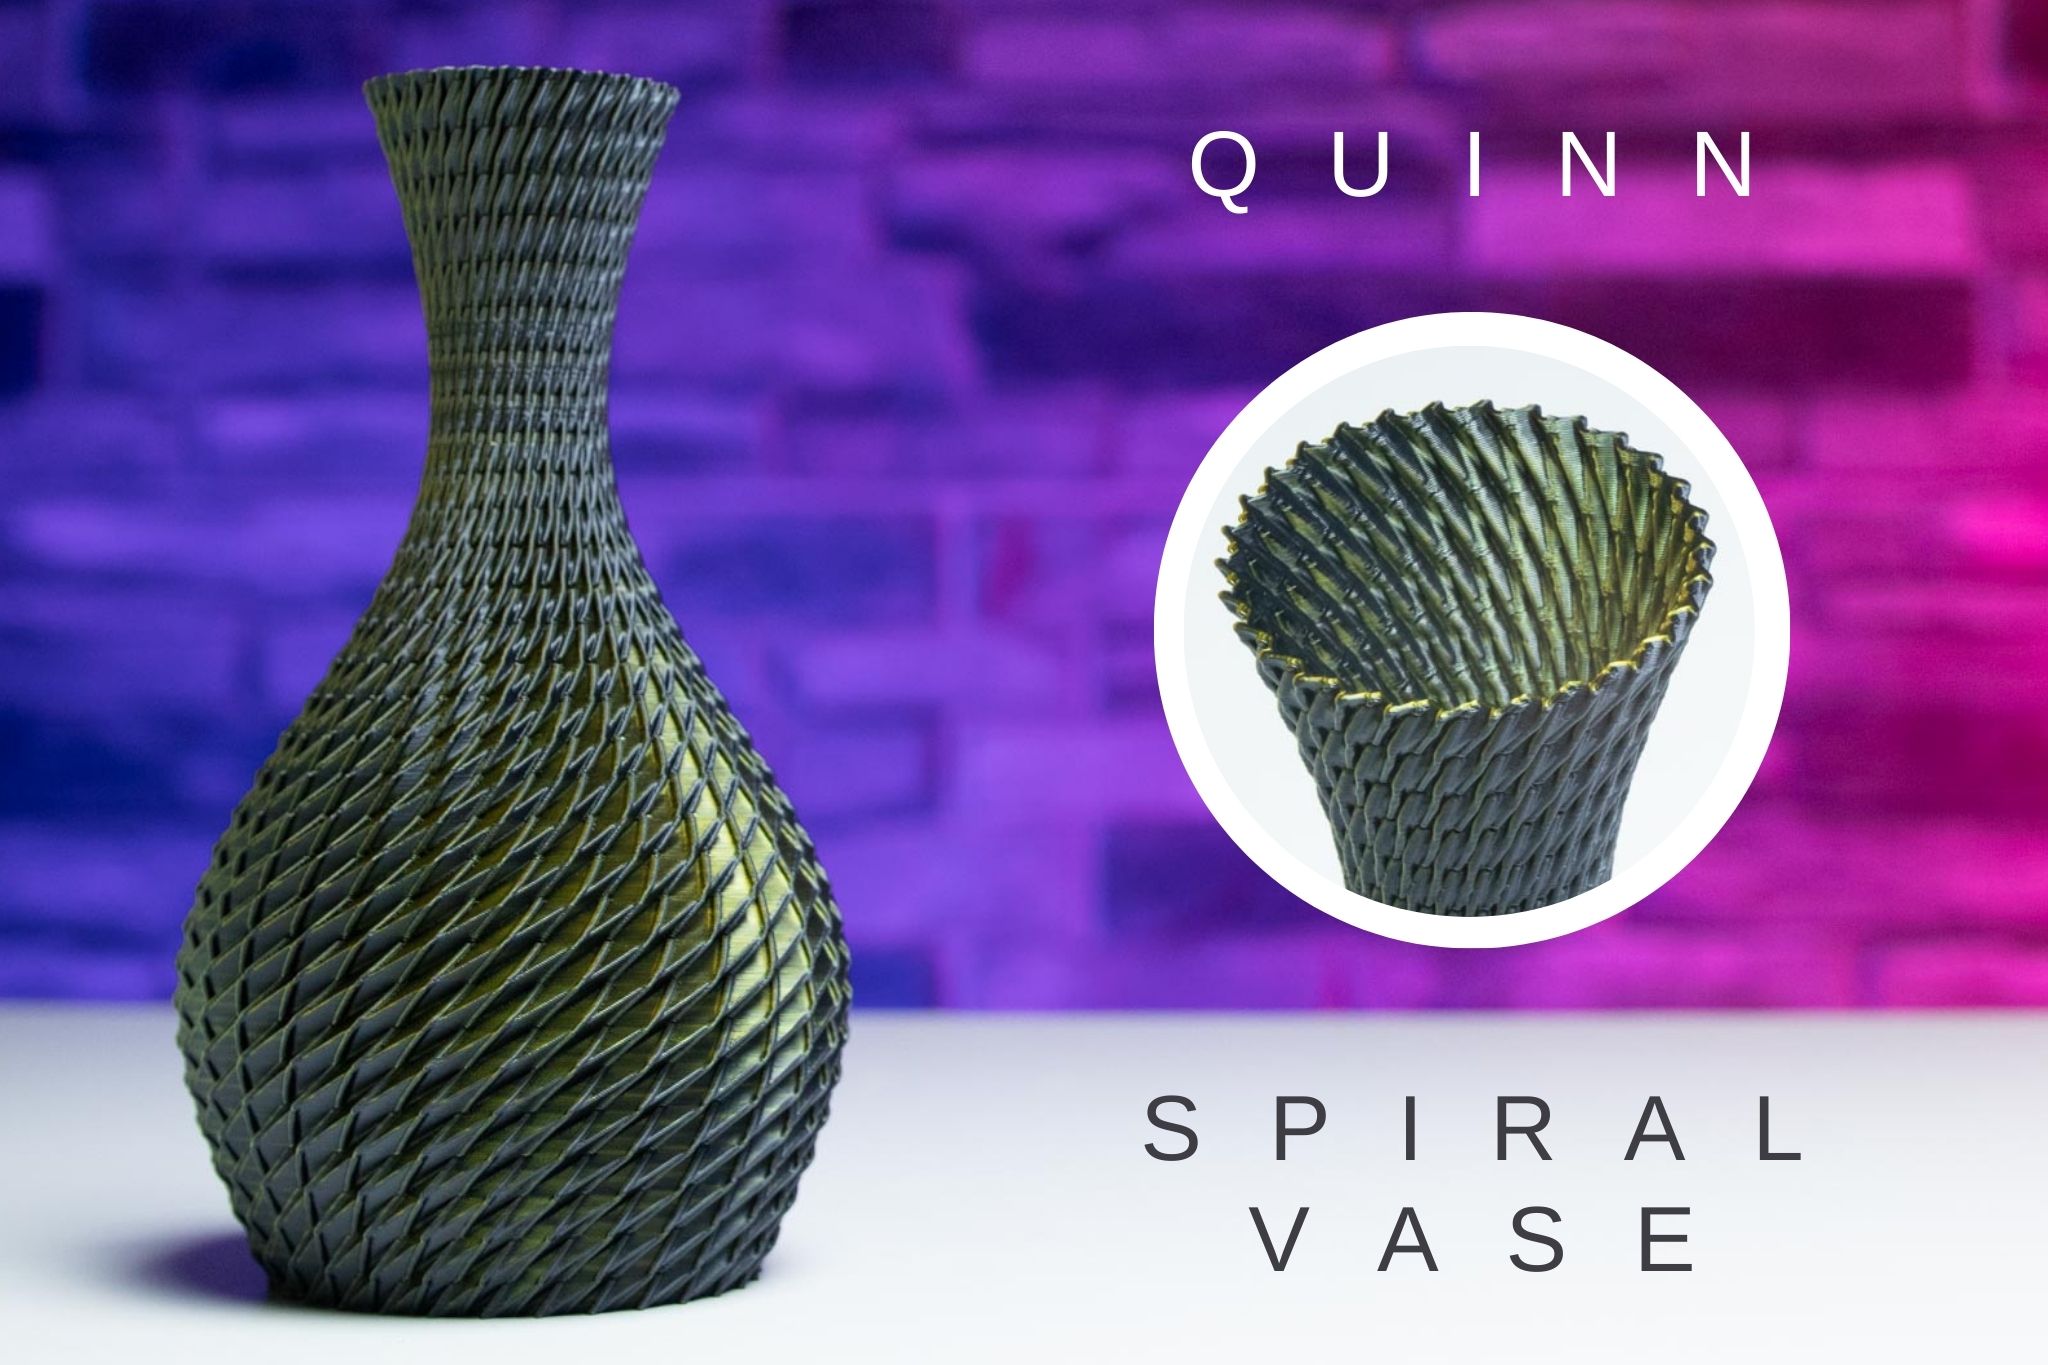 3D Printed Spiral Vase QUINN